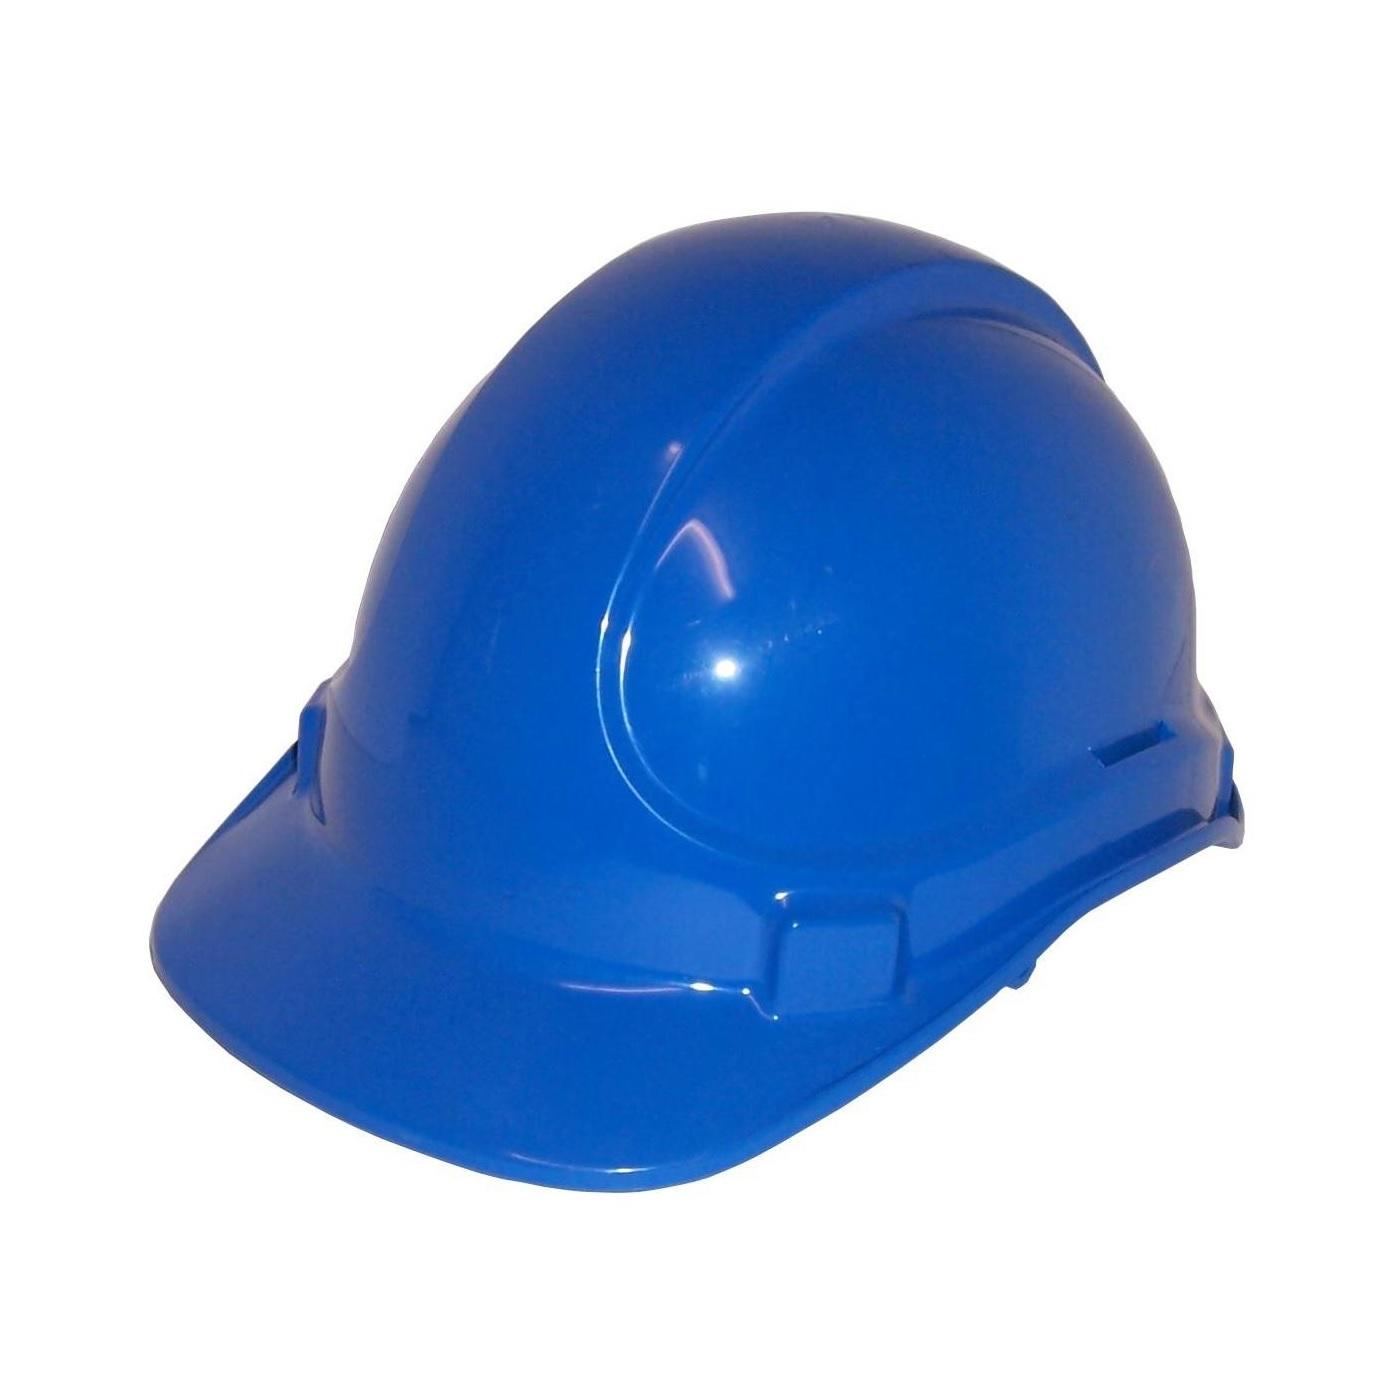 3M UNTA560 - Safety Helmet Blue - Click for more info